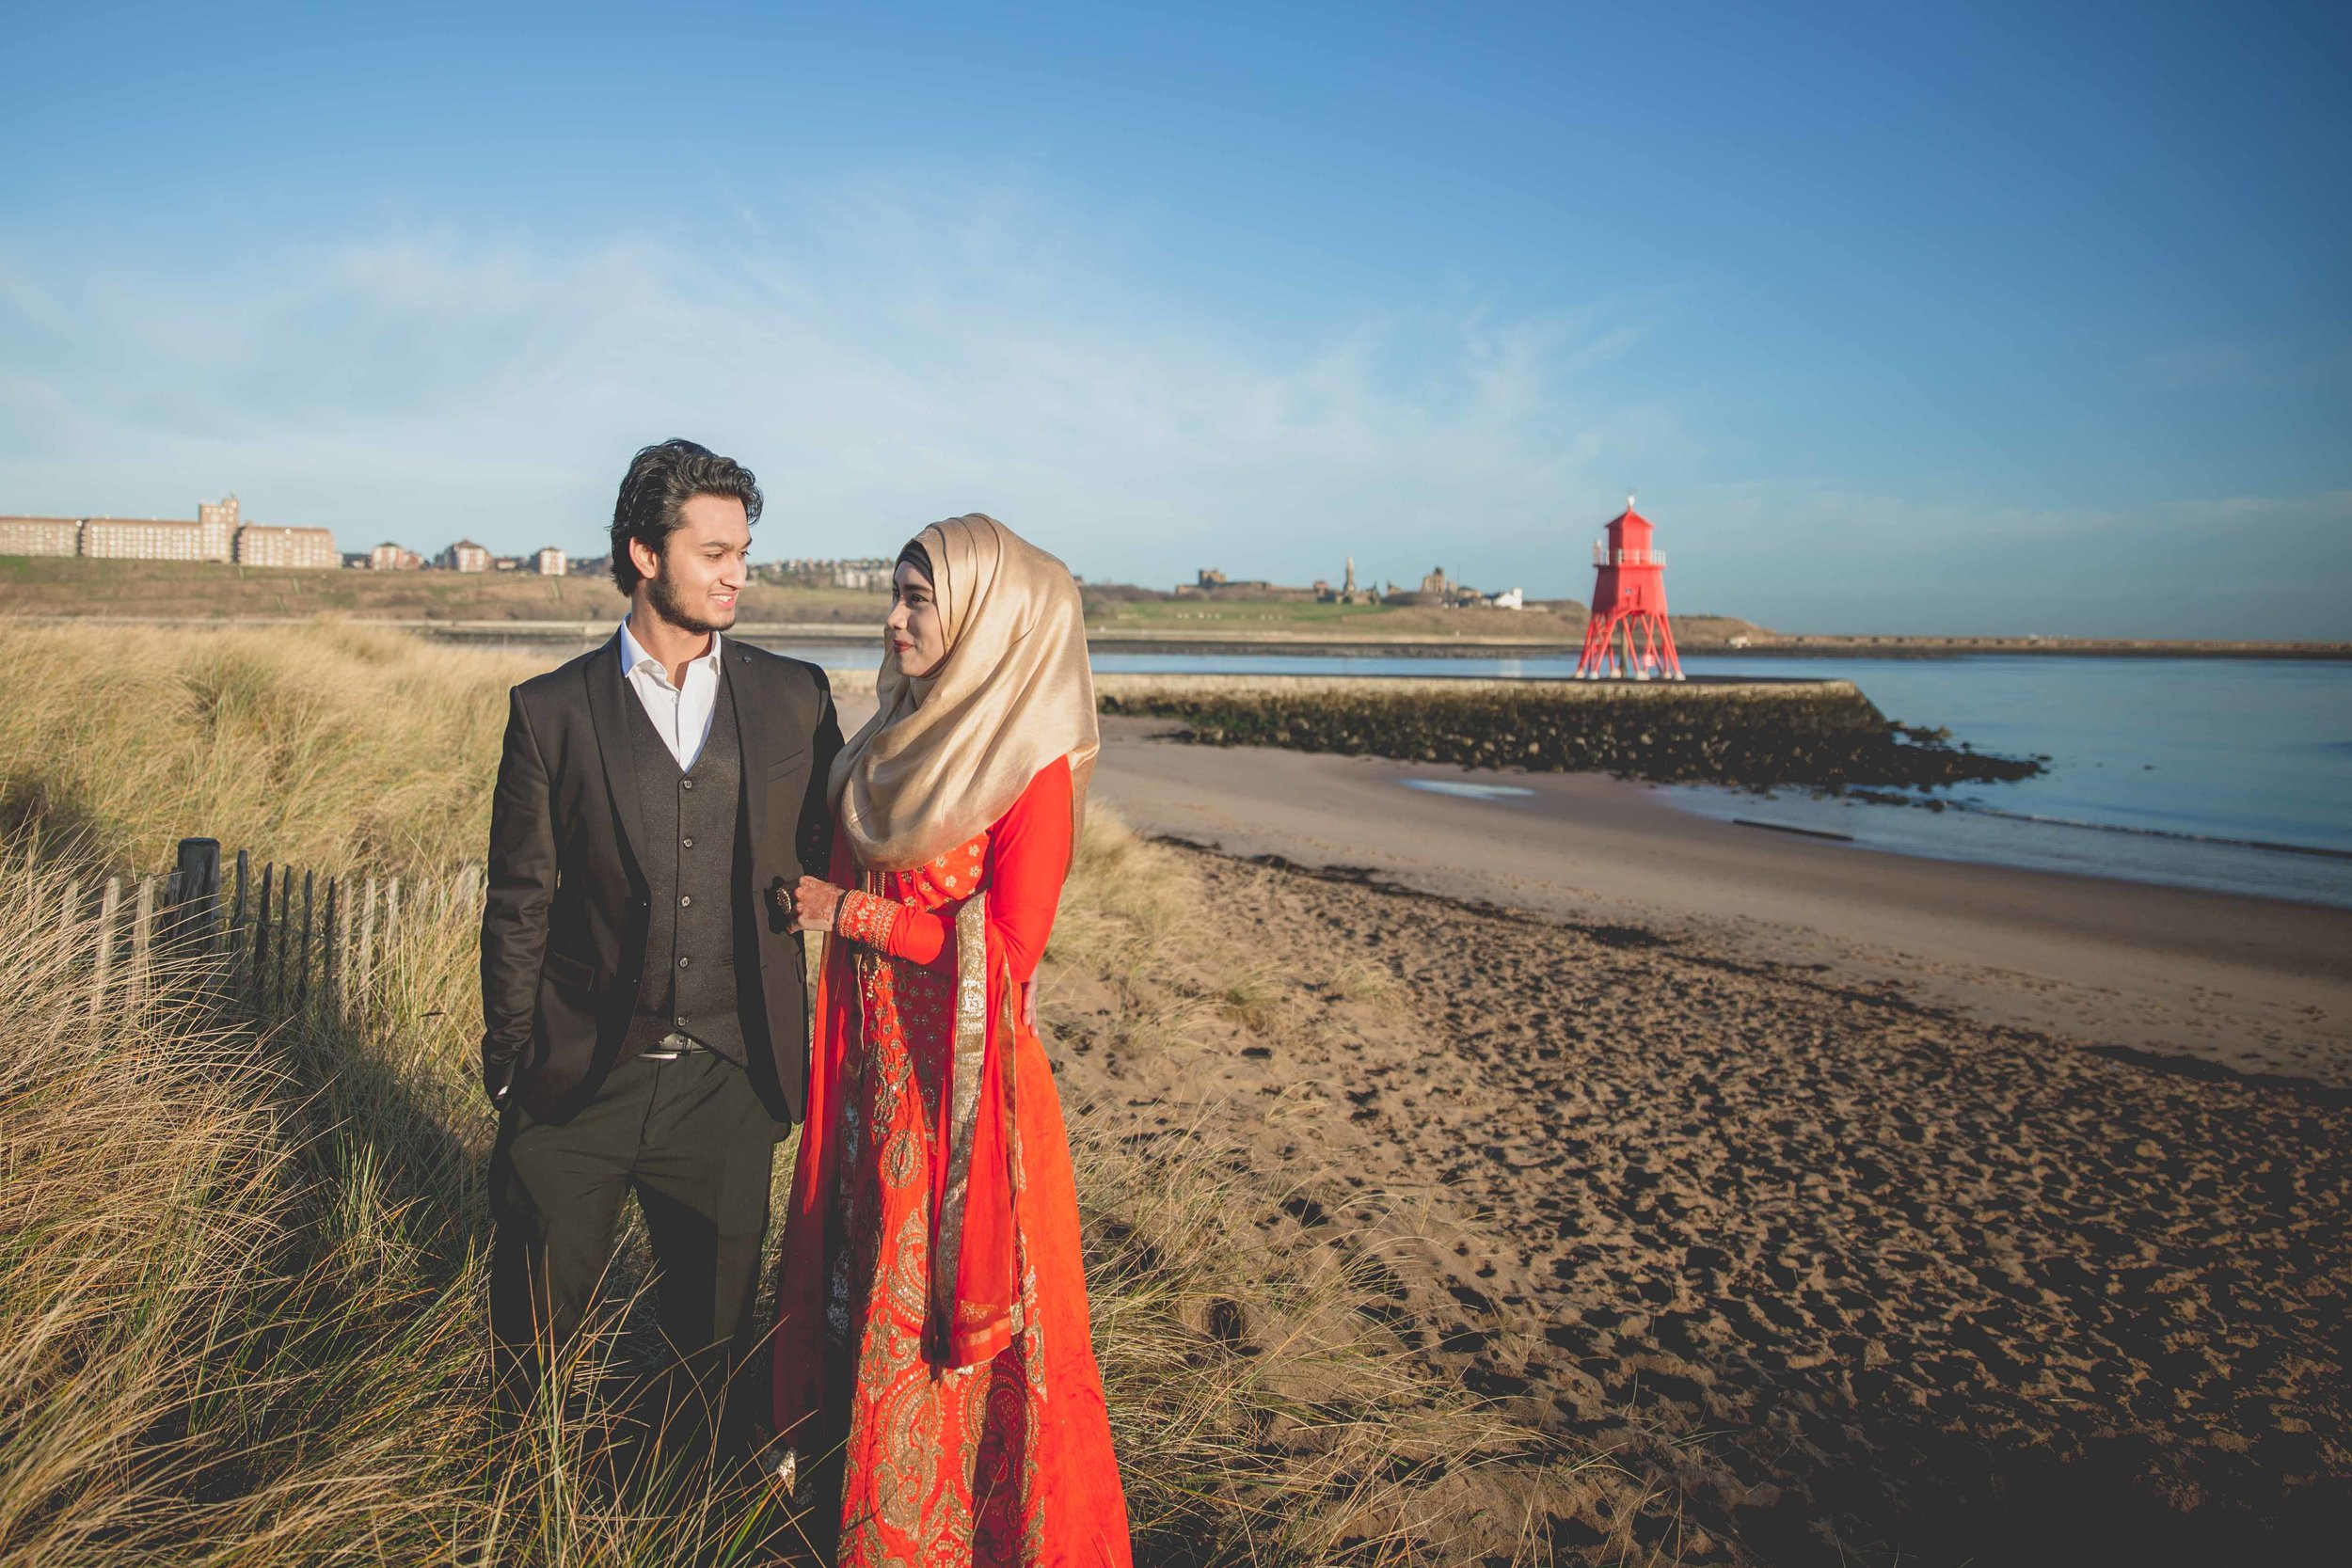 newcastle-beach-lighthouse-couple-prewedding-pre-wedding-shoot-asian-wedding-photographer-natalia-smith-photography-7.jpg